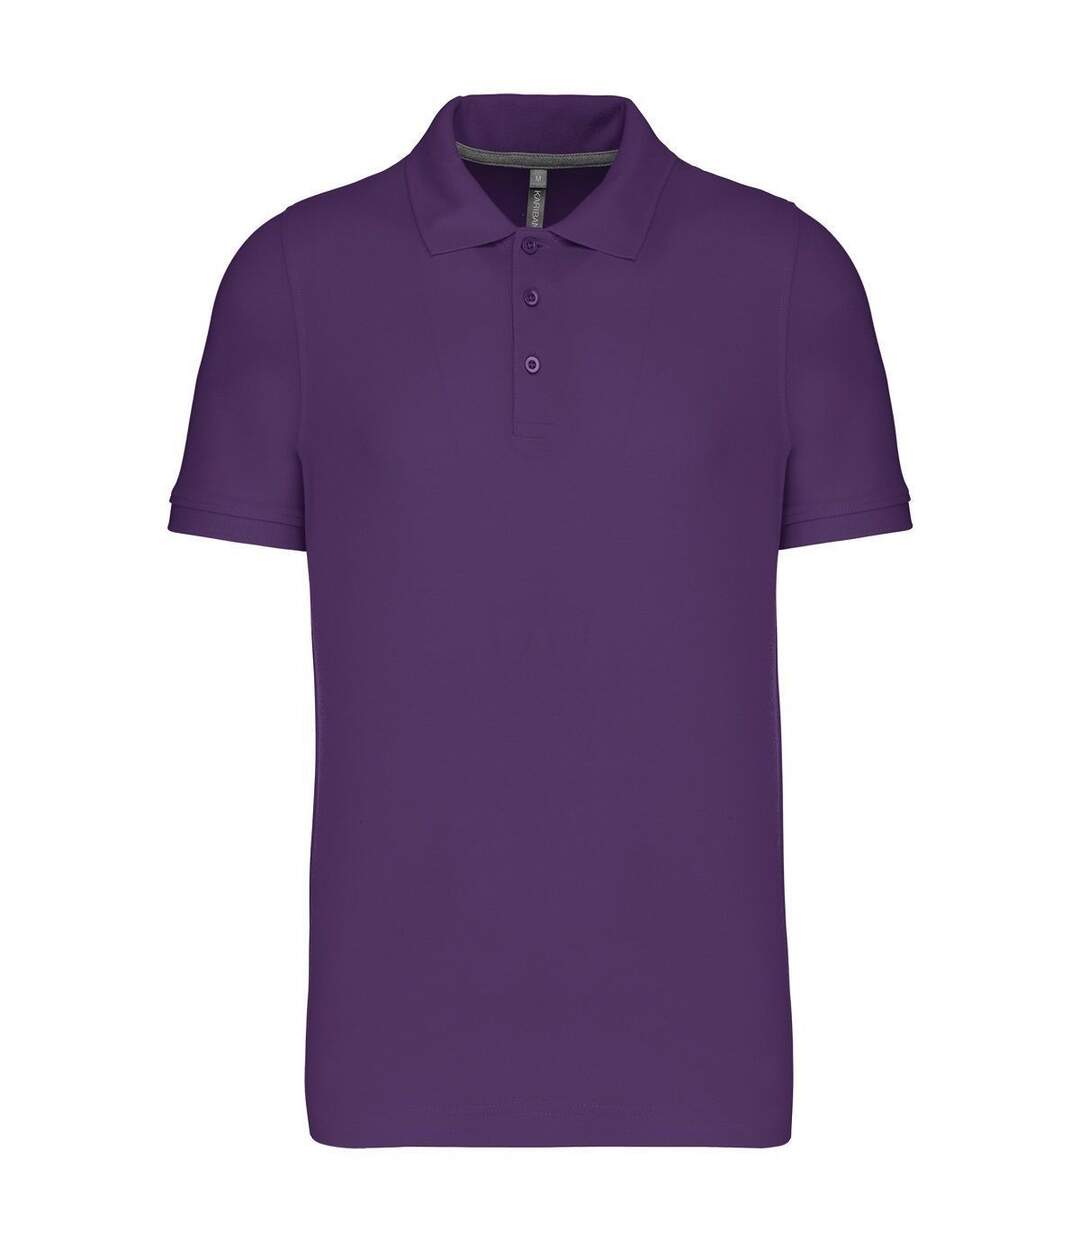 Polo manches courtes - Homme - K241 - violet